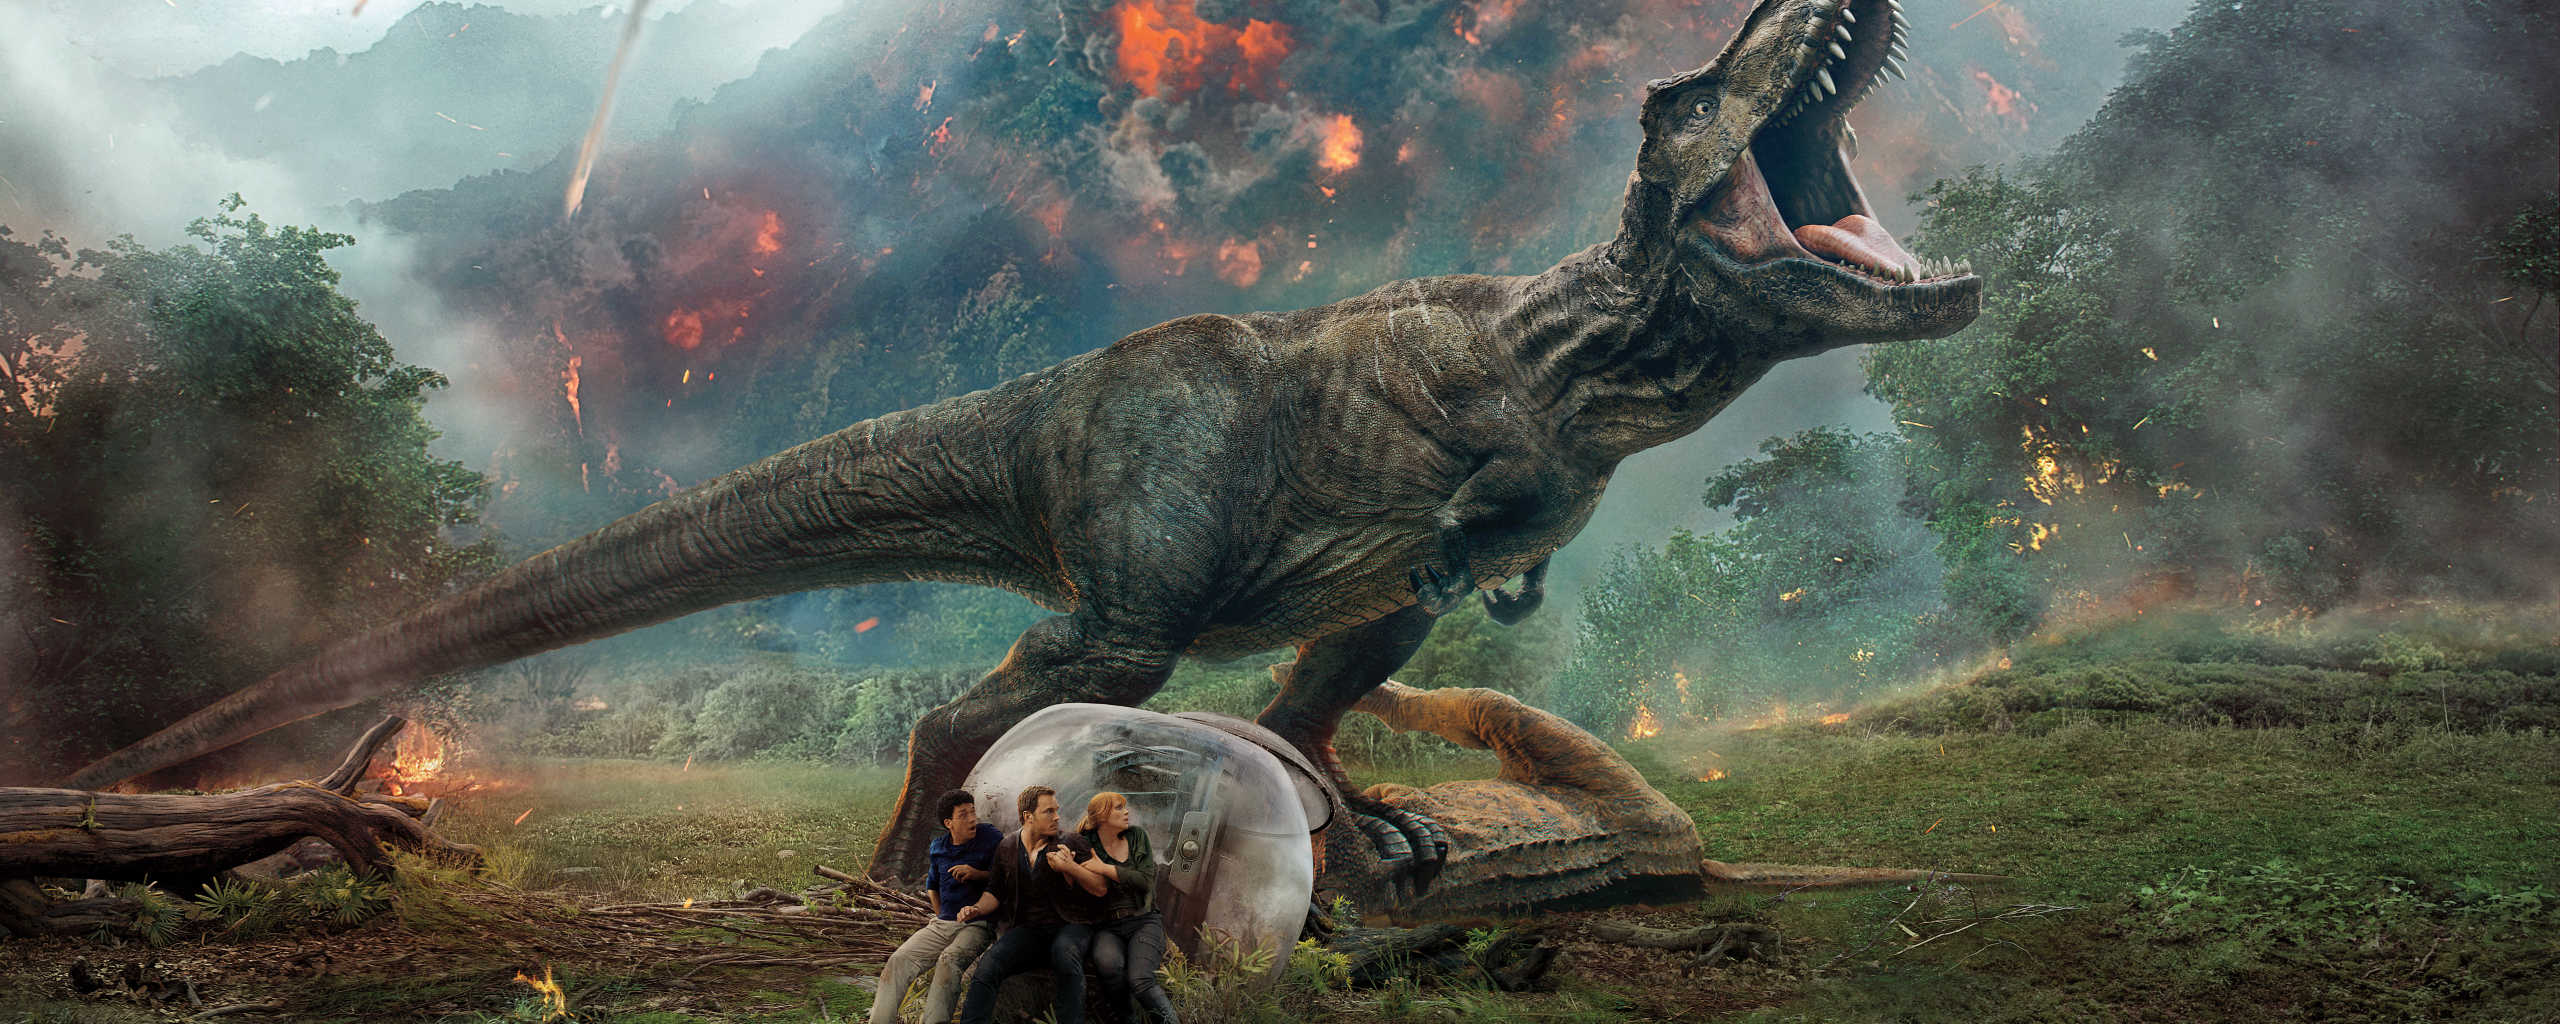 Image tirée du film jurassic world fallen kingdom bande annonce. Jurassic World 2